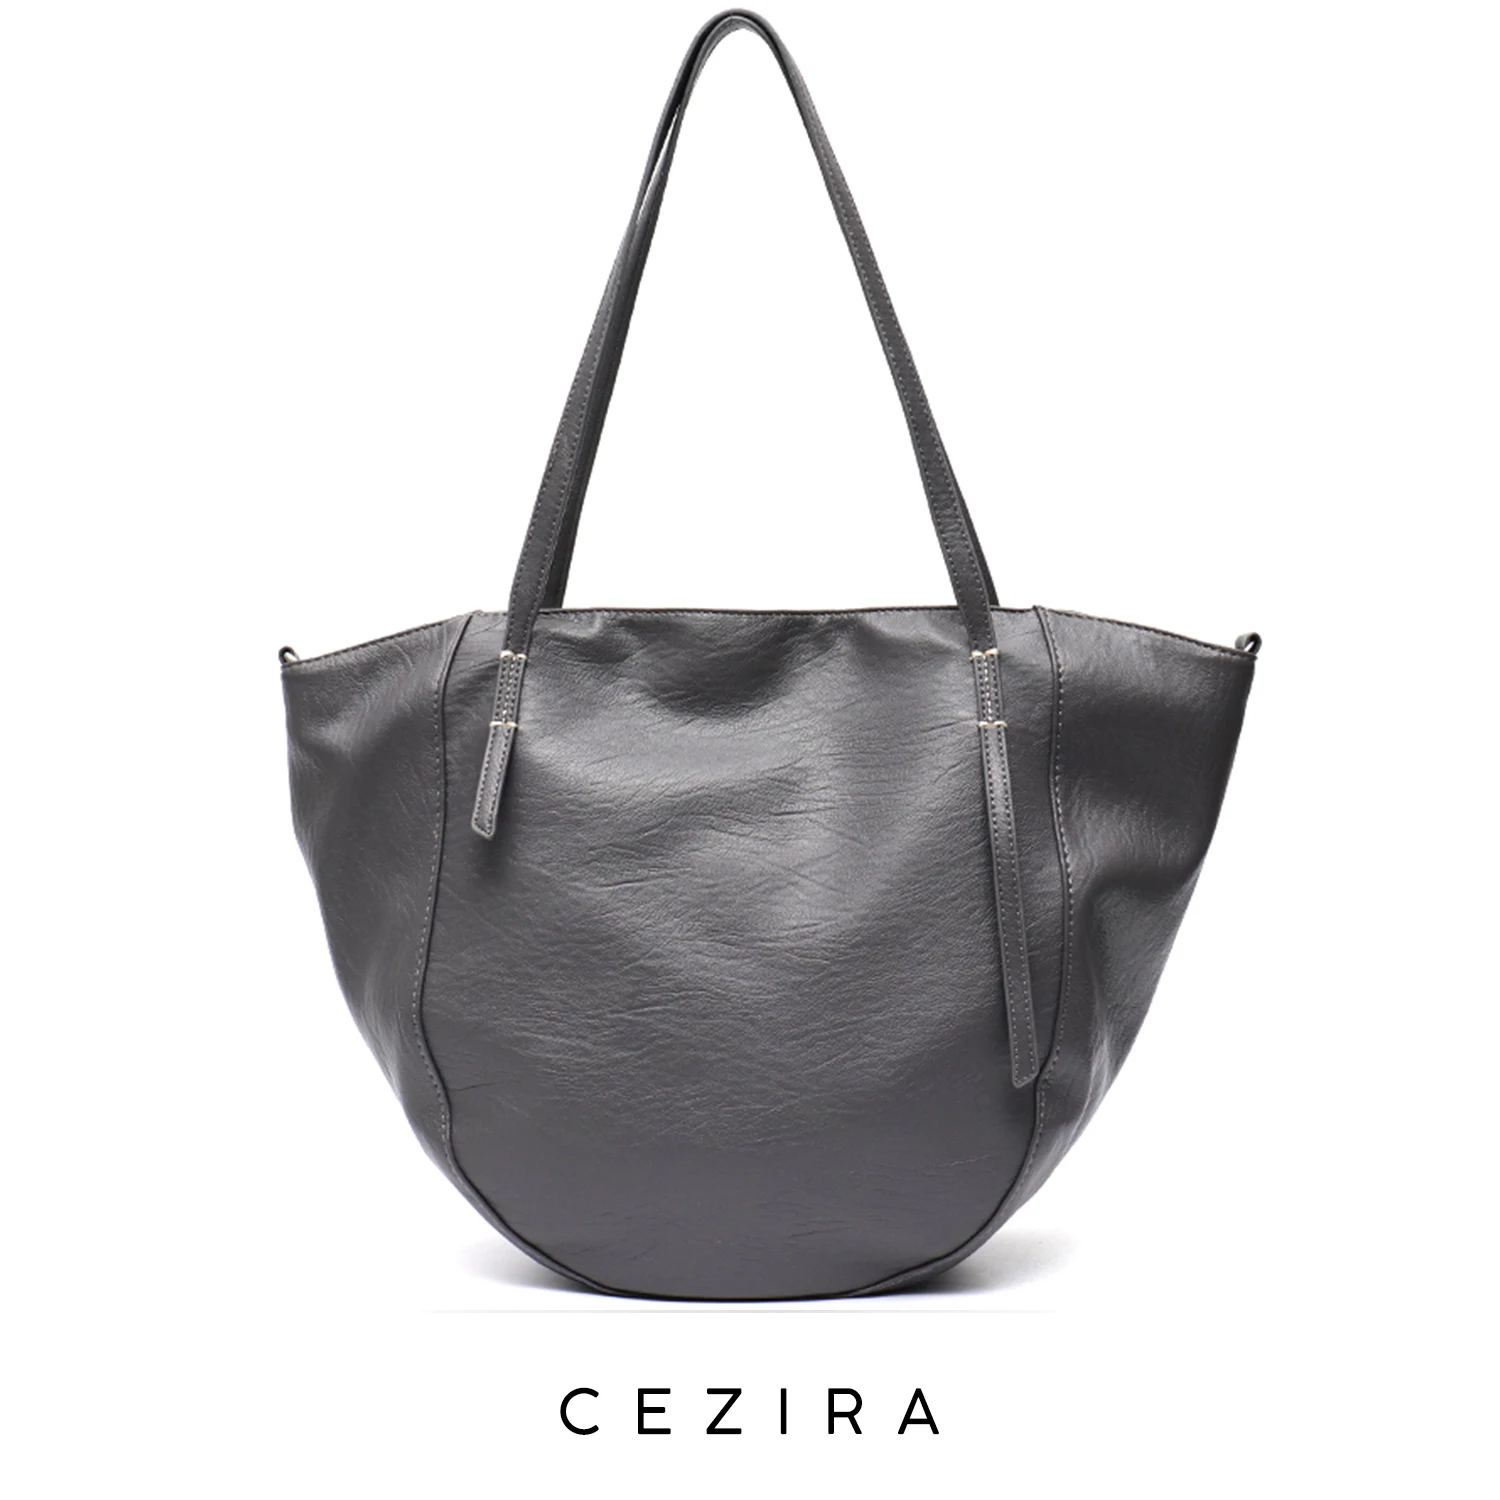 

CEZIRA Women Soft PU Vegan Leather Tote Casual Large Shoulder Handbags Ladies Daily Shopping Travel Hobo Bags Zipper Inner Purse